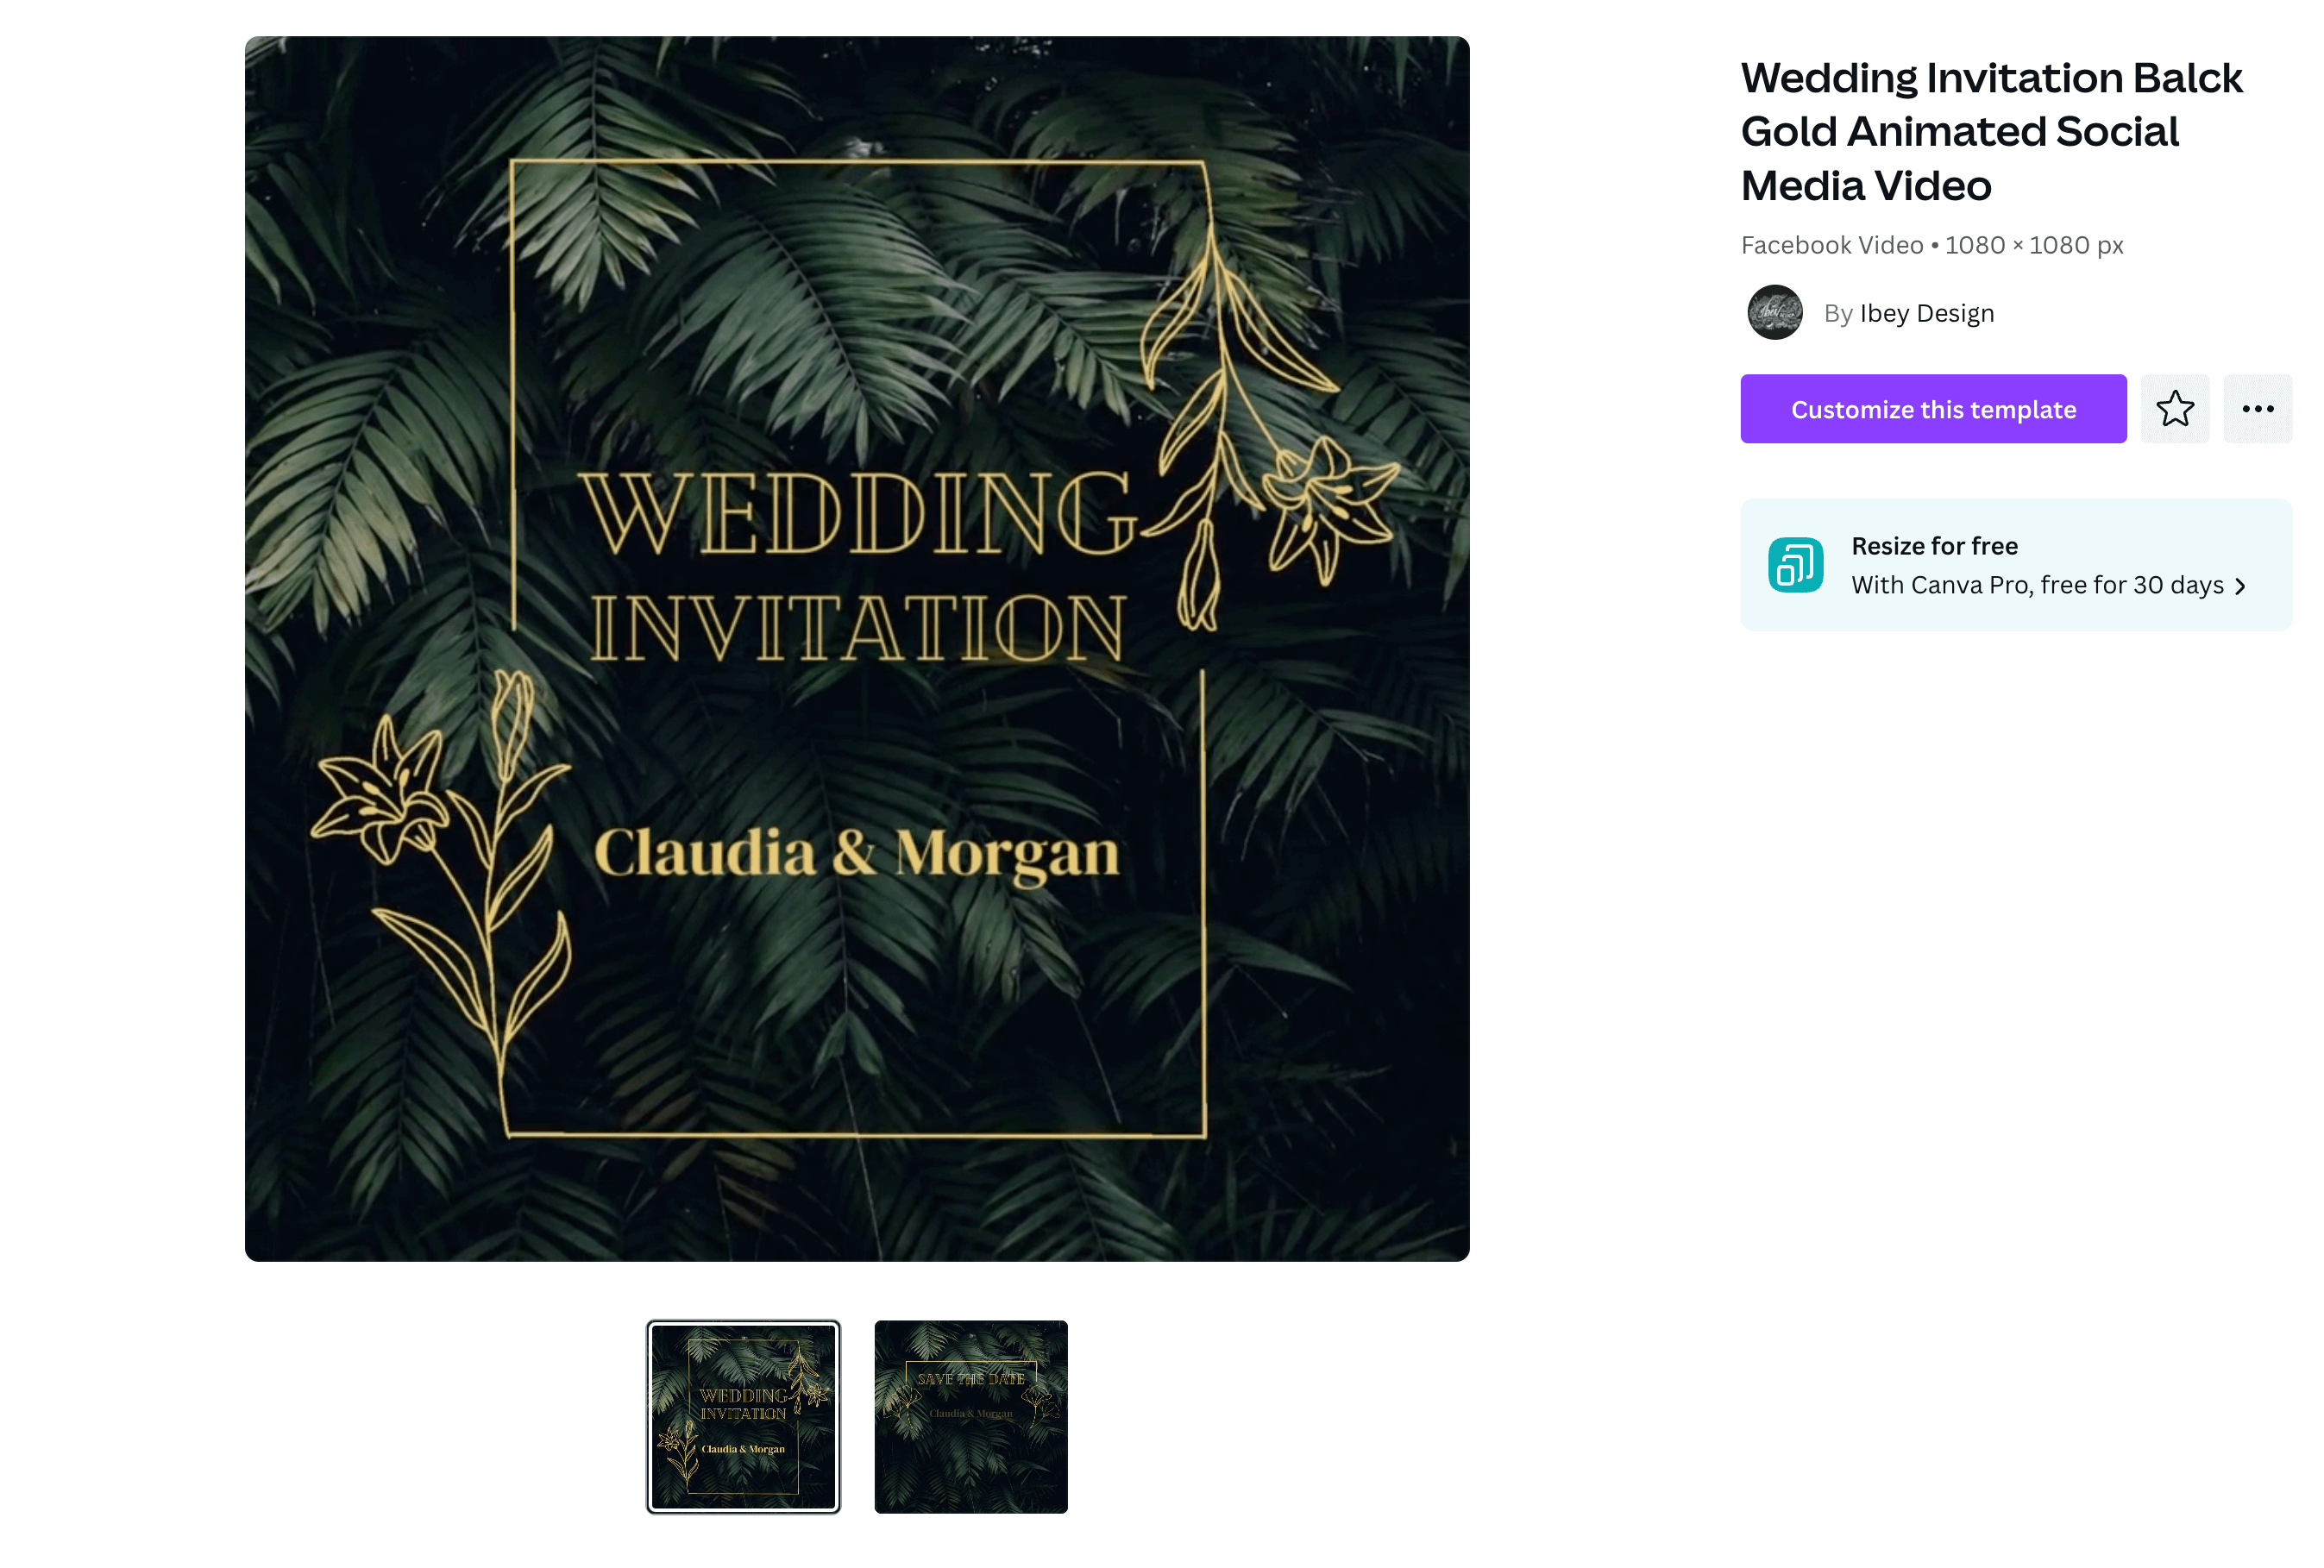 An animated wedding invitation in an art deco-like visual style